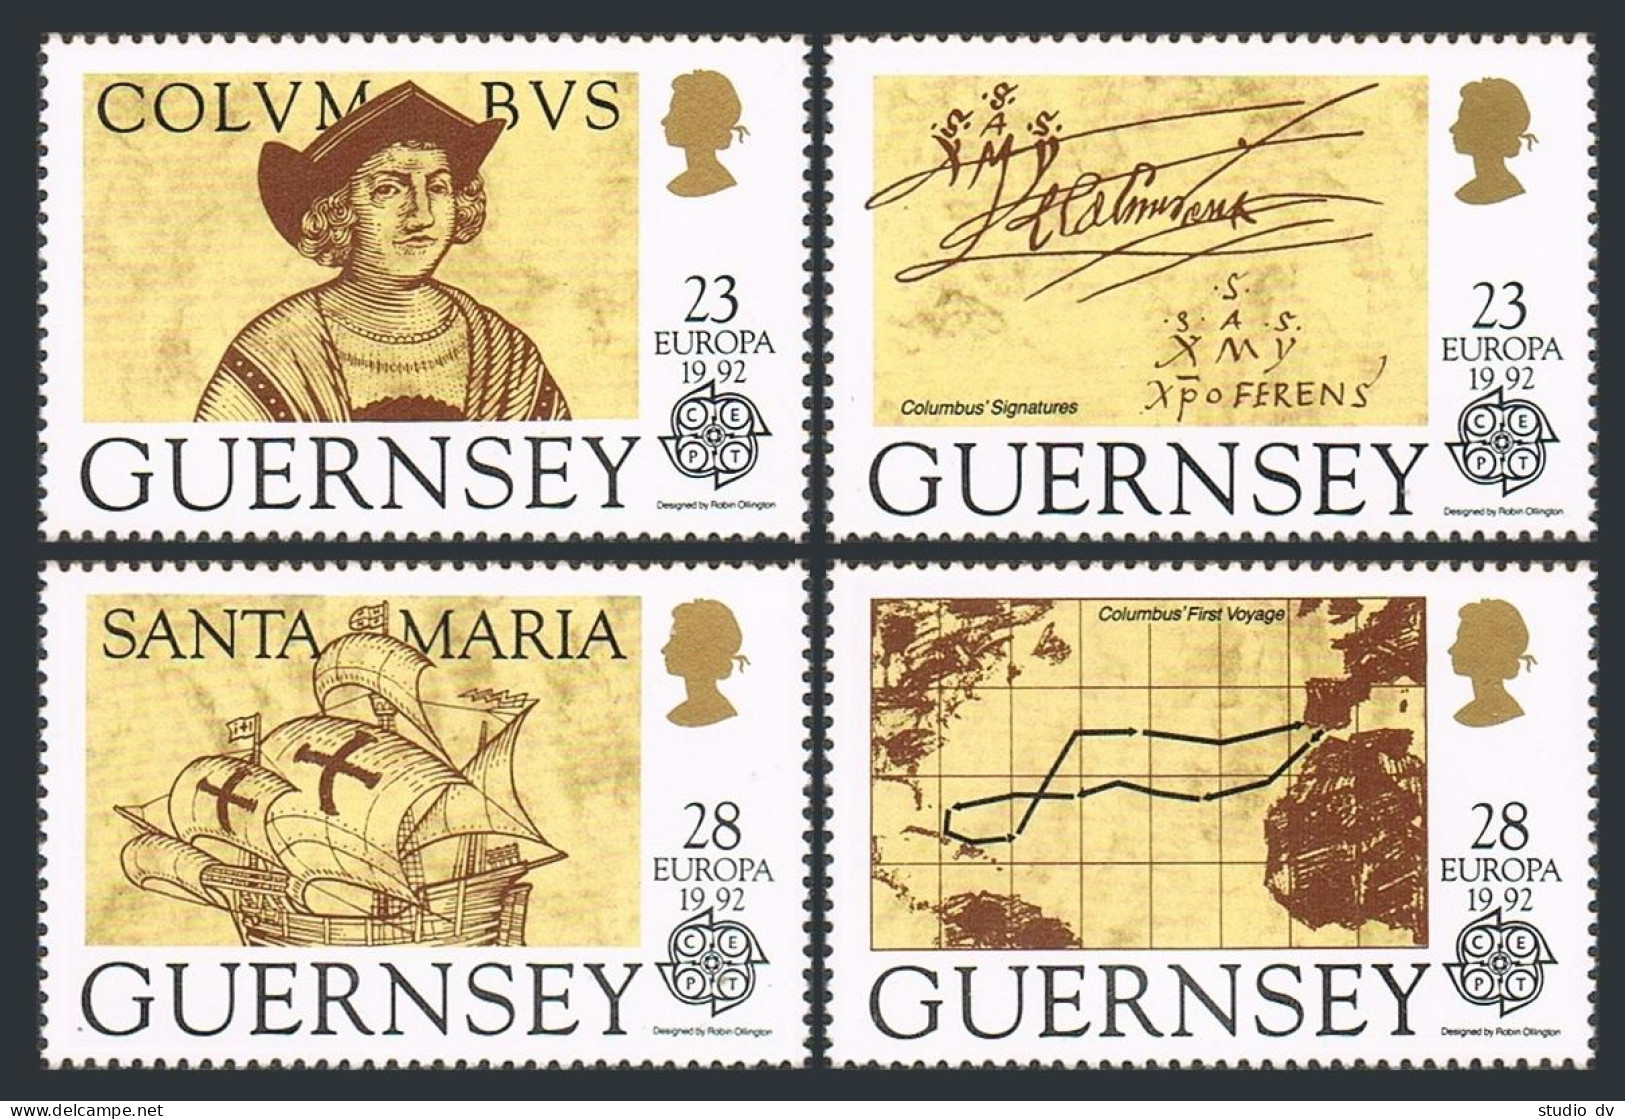 Guernsey 467-470, MNH. Mi 549-552. EUROPE CEPT-1992. Columbus-500. Ships, Map. - Guernsey